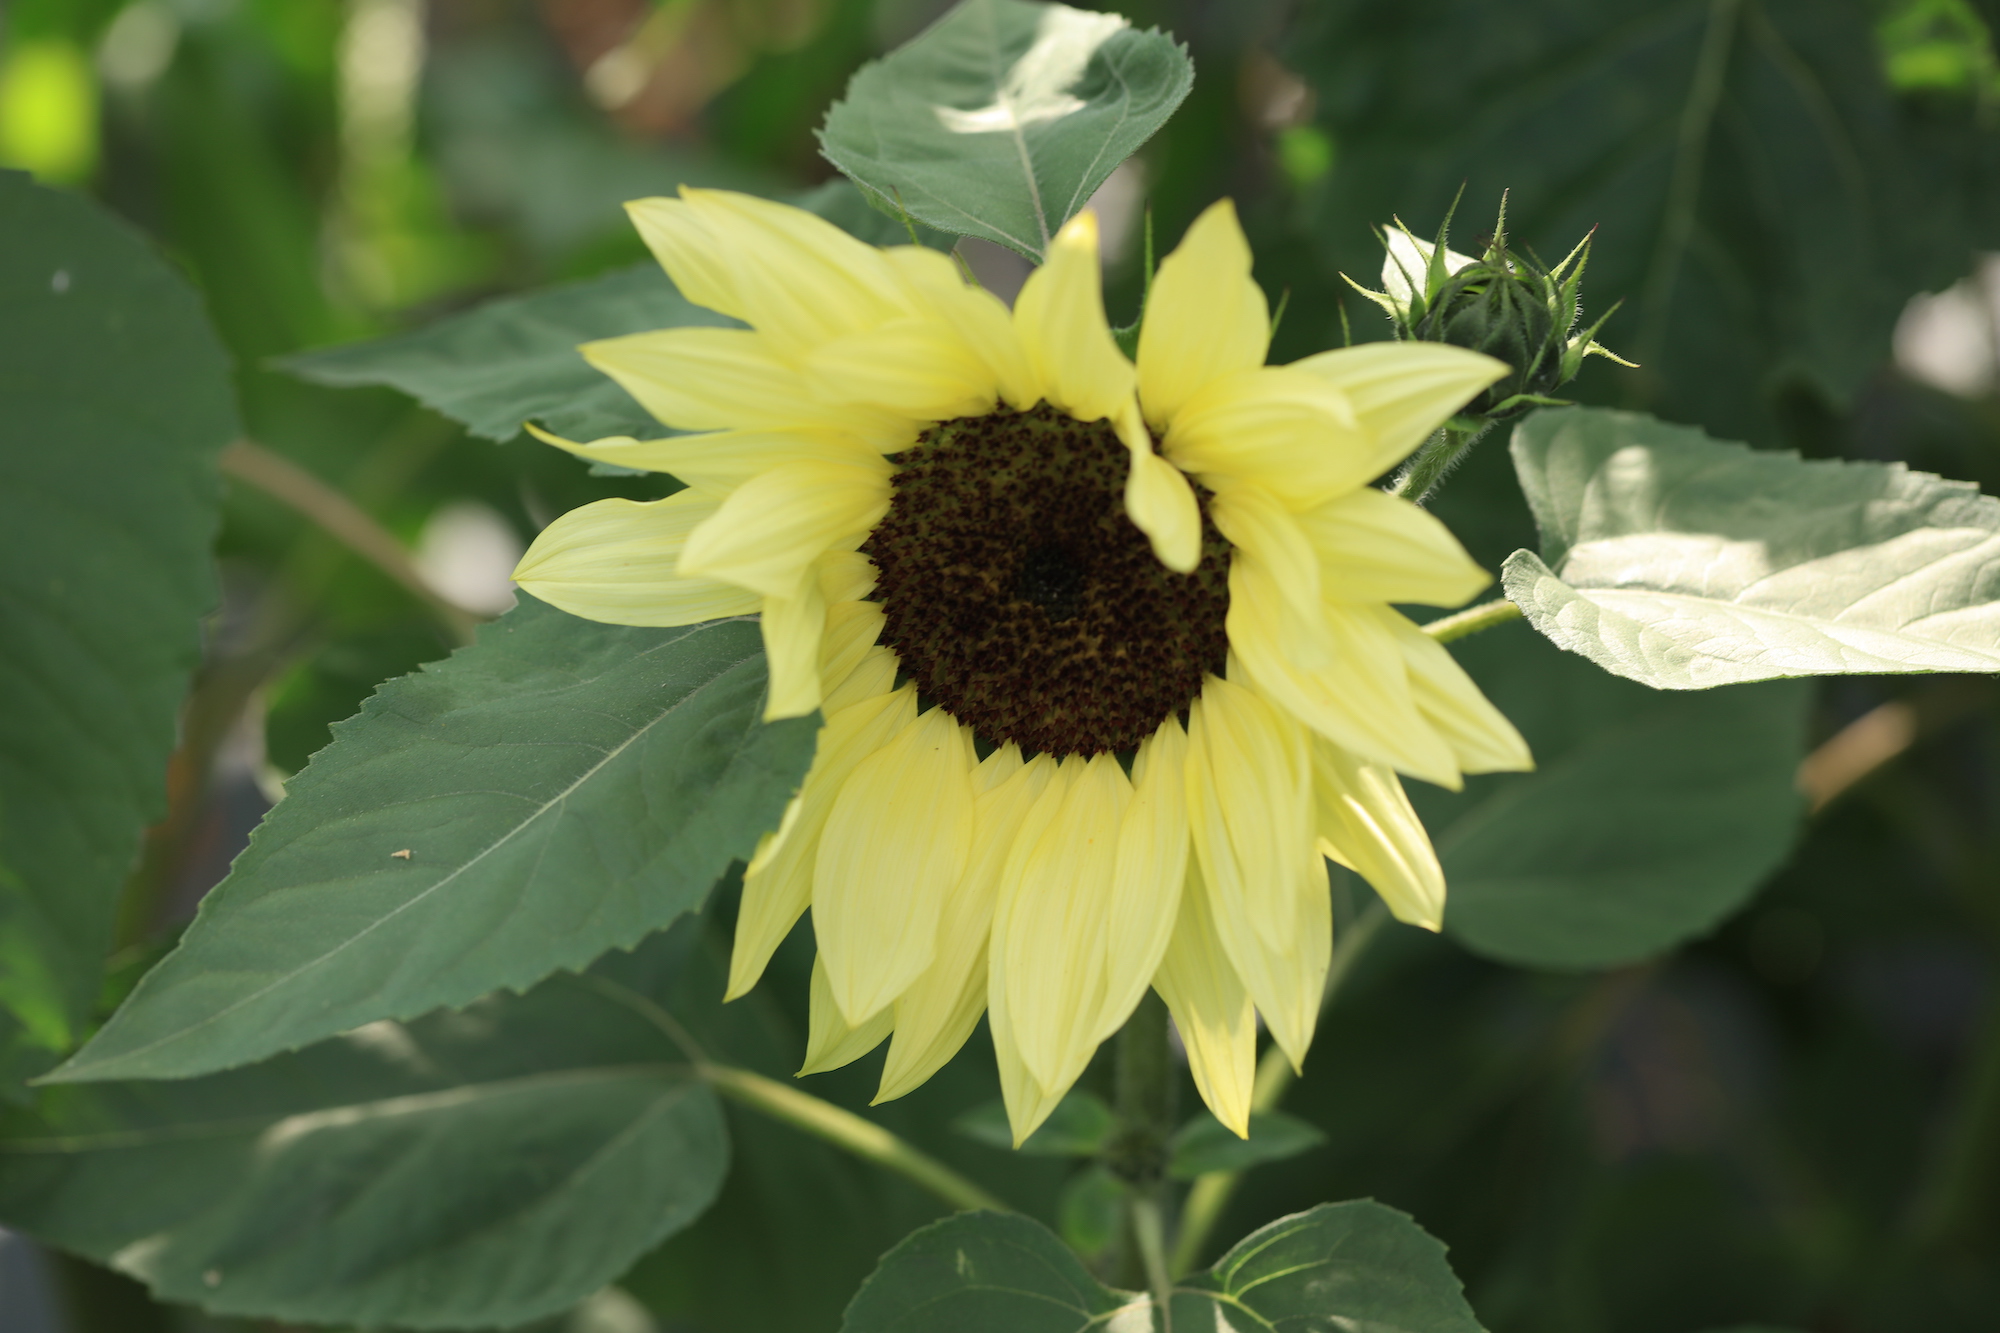 Lemon sunflower close up shot in cotswold garden